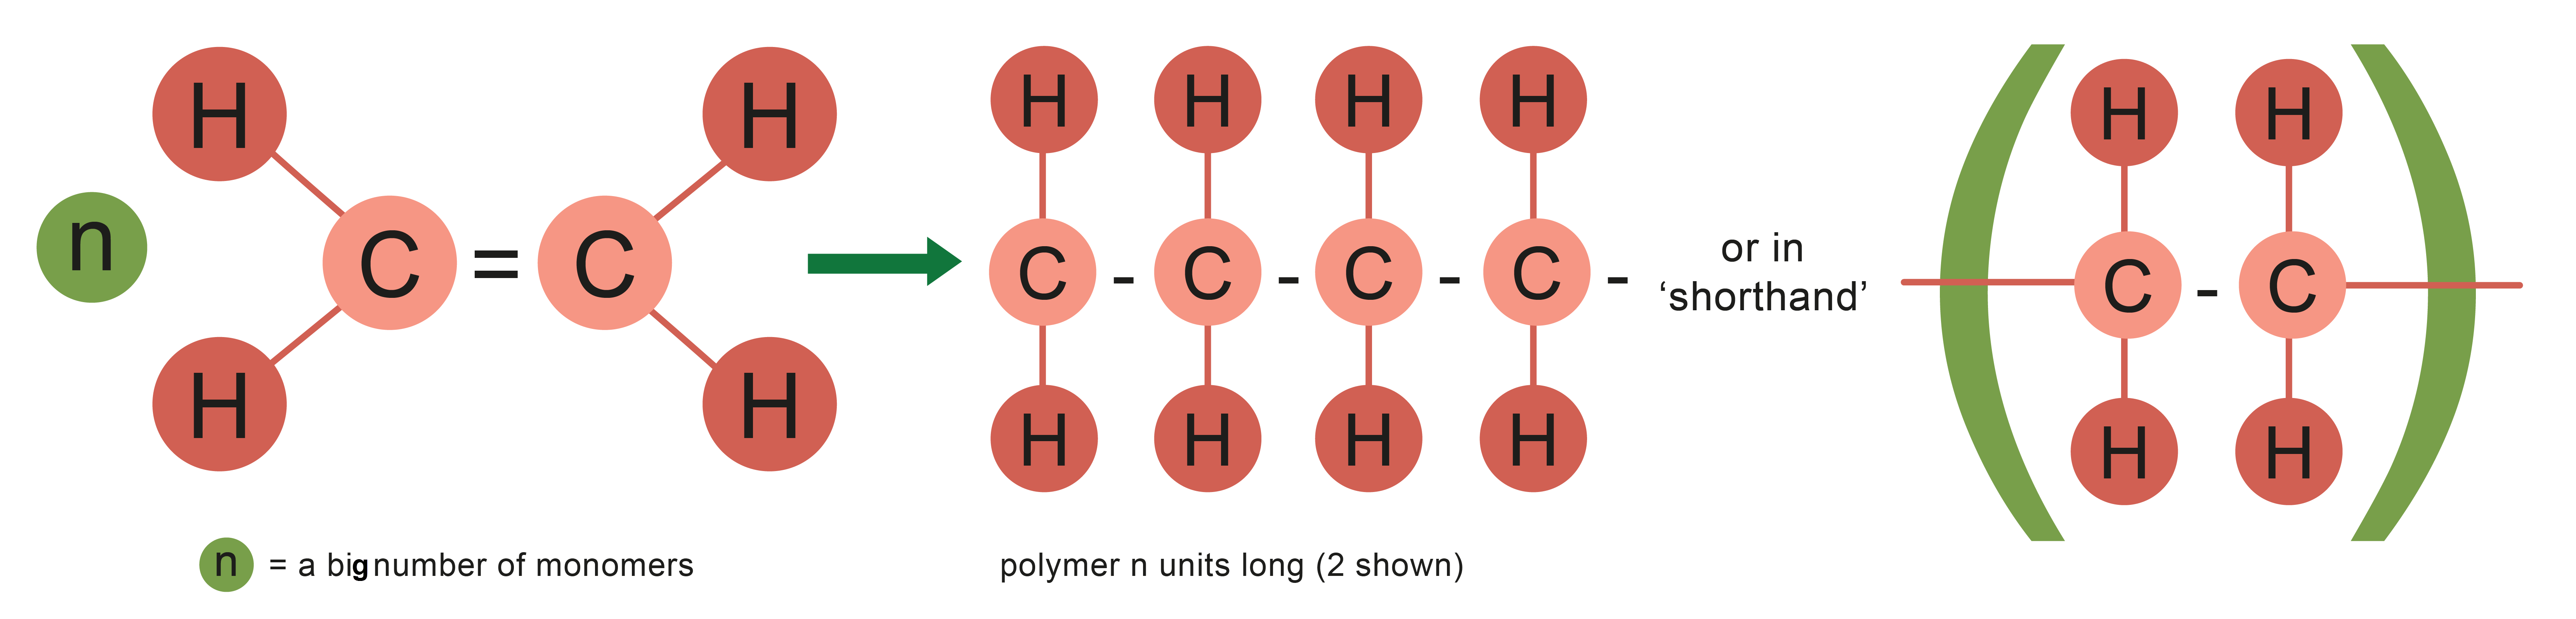 Polymerization Types